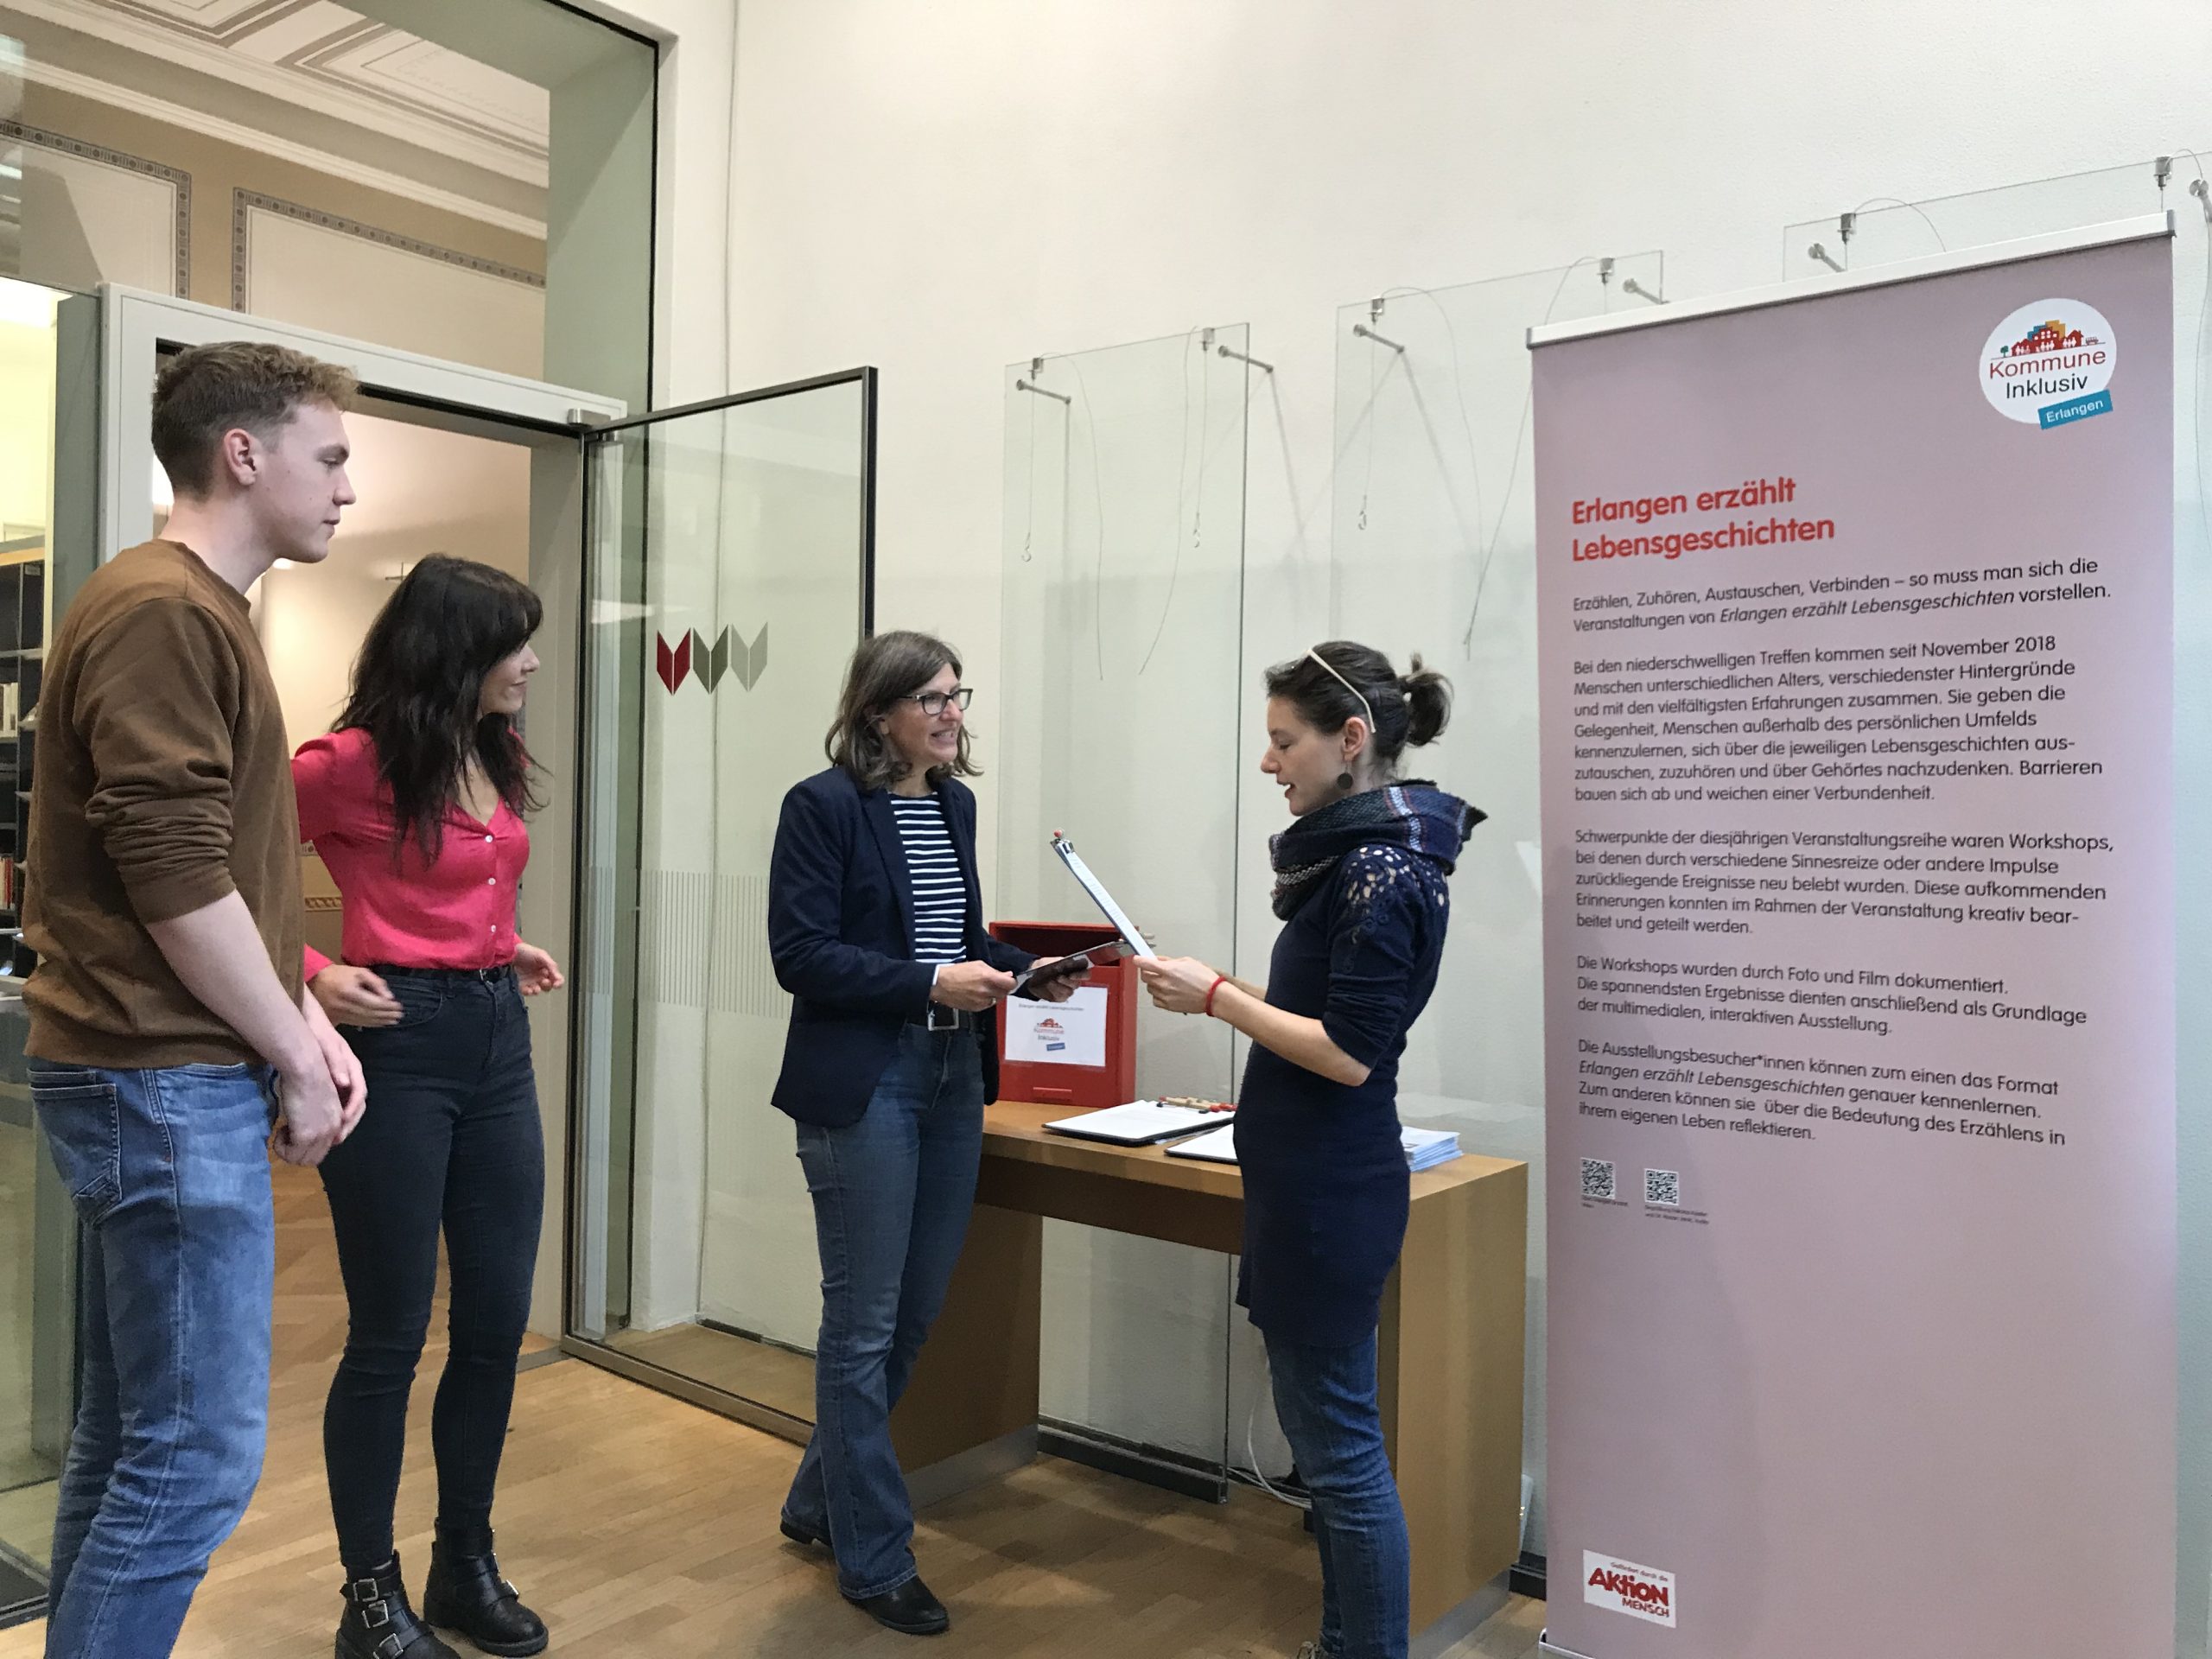 Personen in der Ausstellung "Erlangen erzählt Lebensgeschichten"